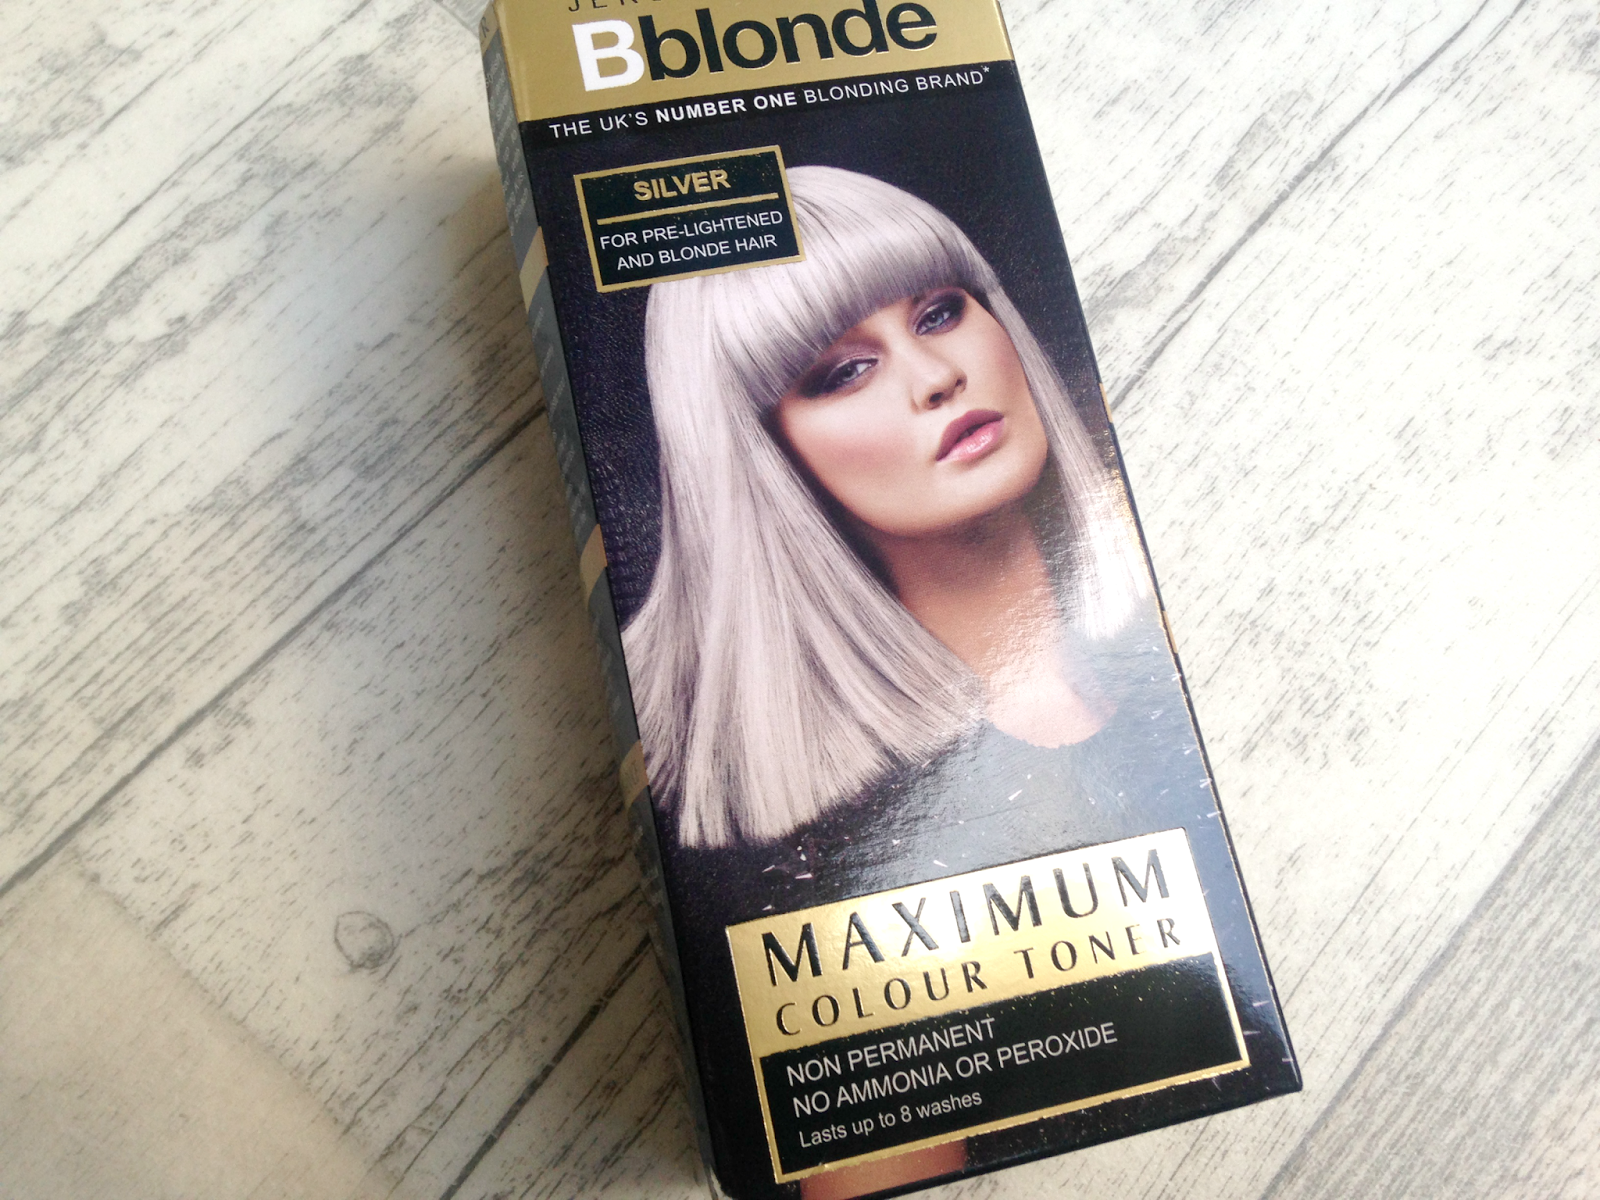 9. Jerome Russell Bblonde Maximum Blonding Kit - wide 5